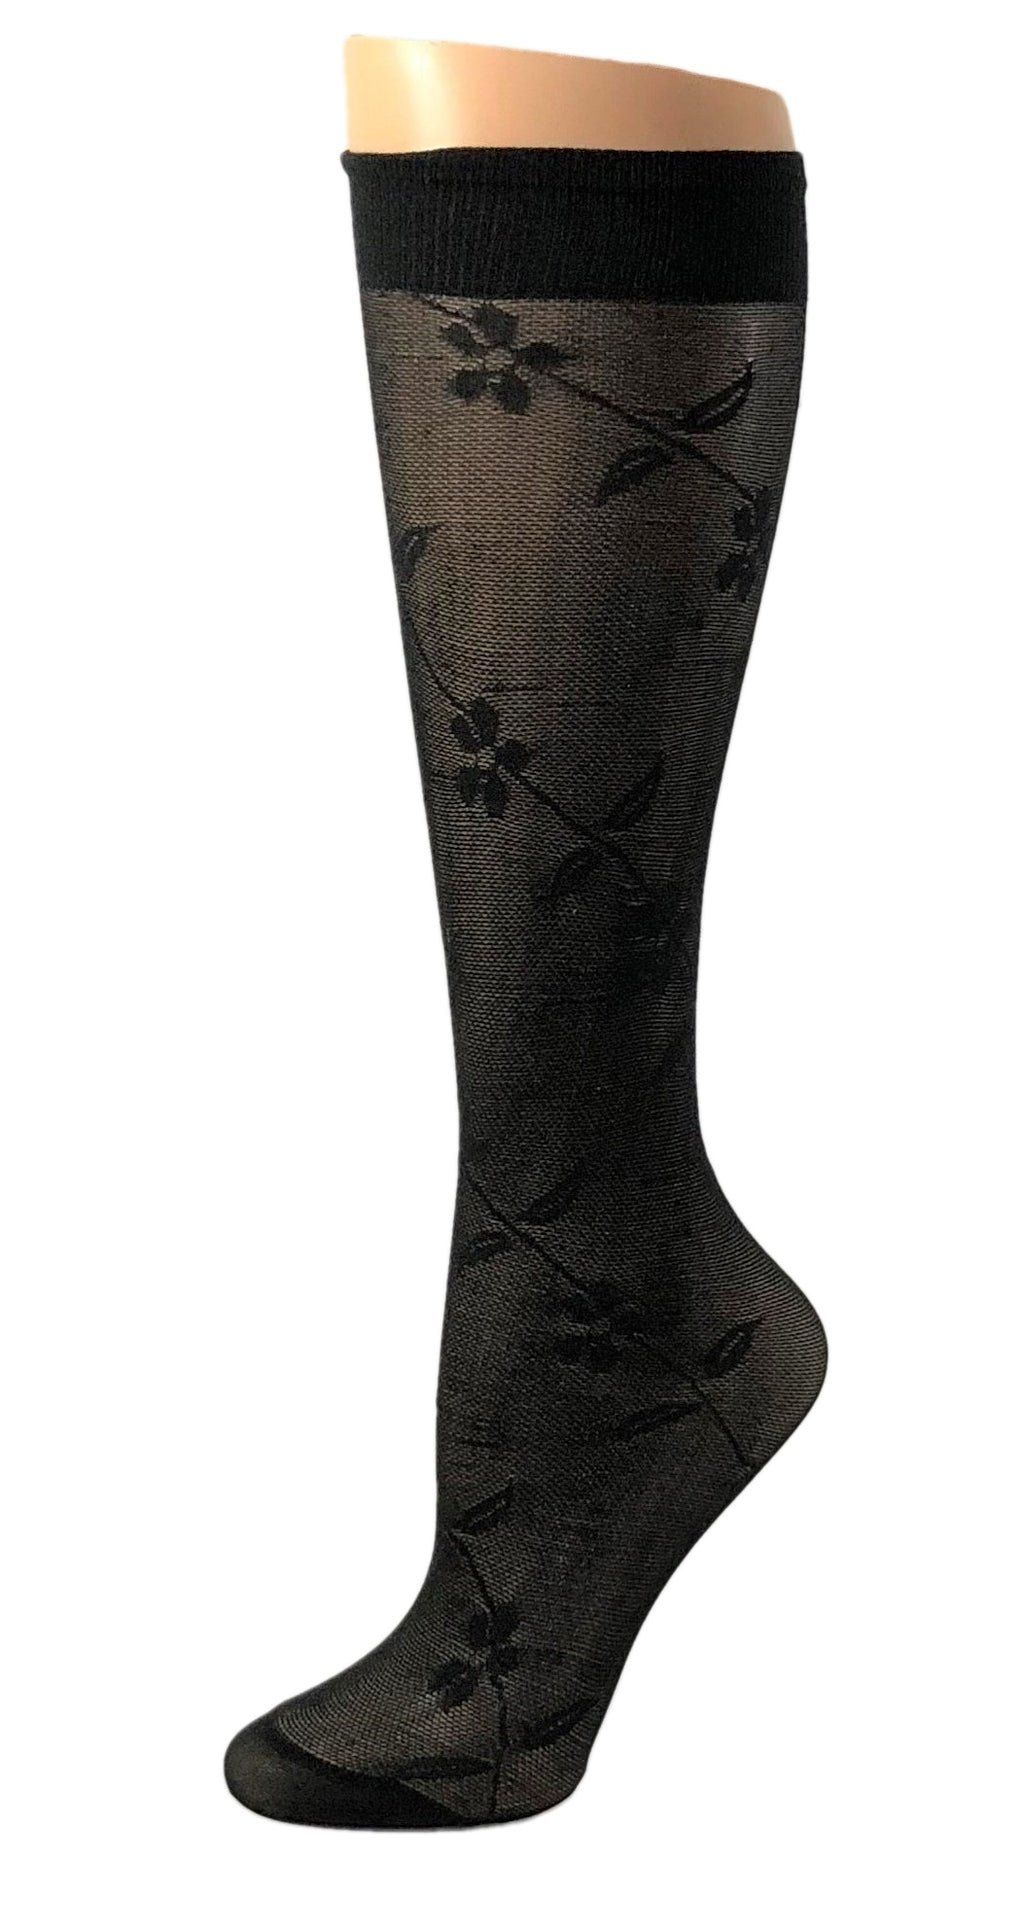 Black Flowers knee high Socks - Global Trendz Fashion®